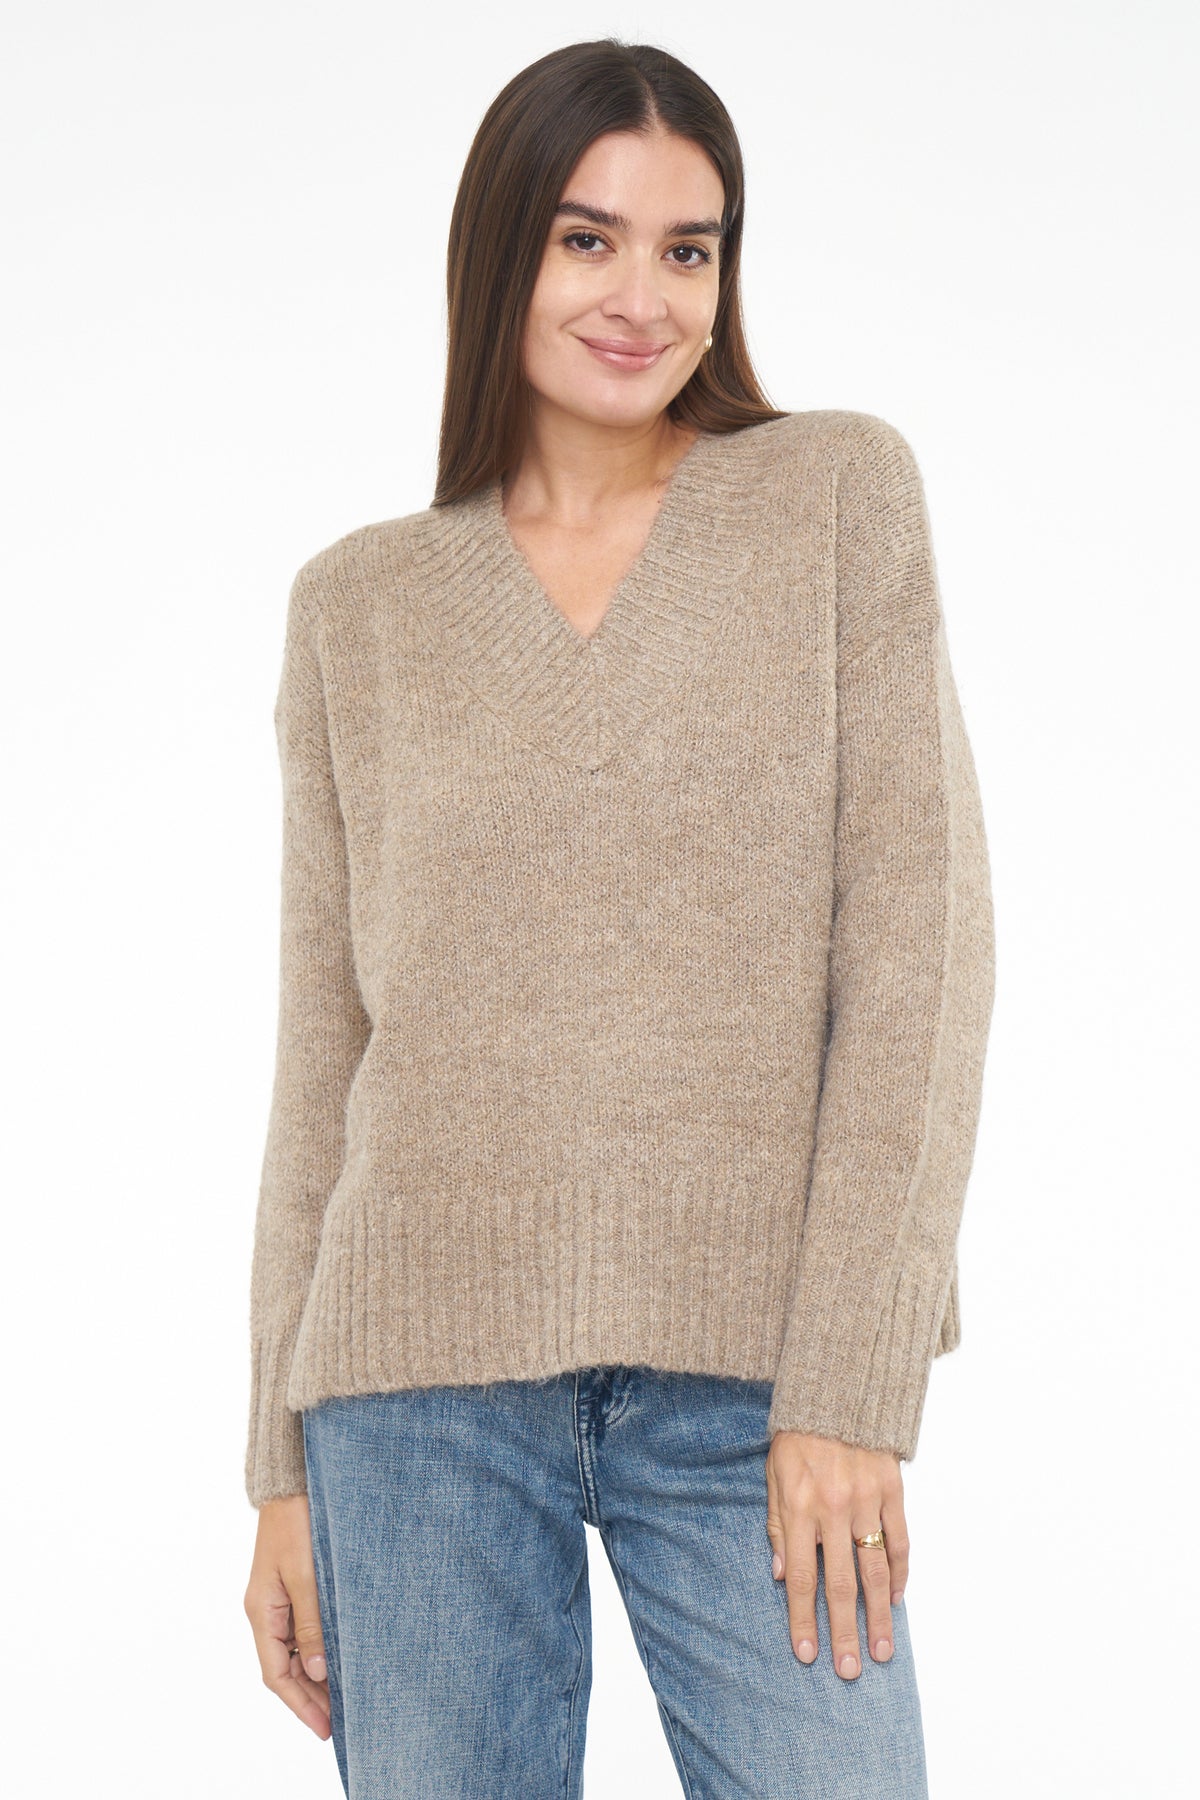 Vania V Neck Sweater - Taupe